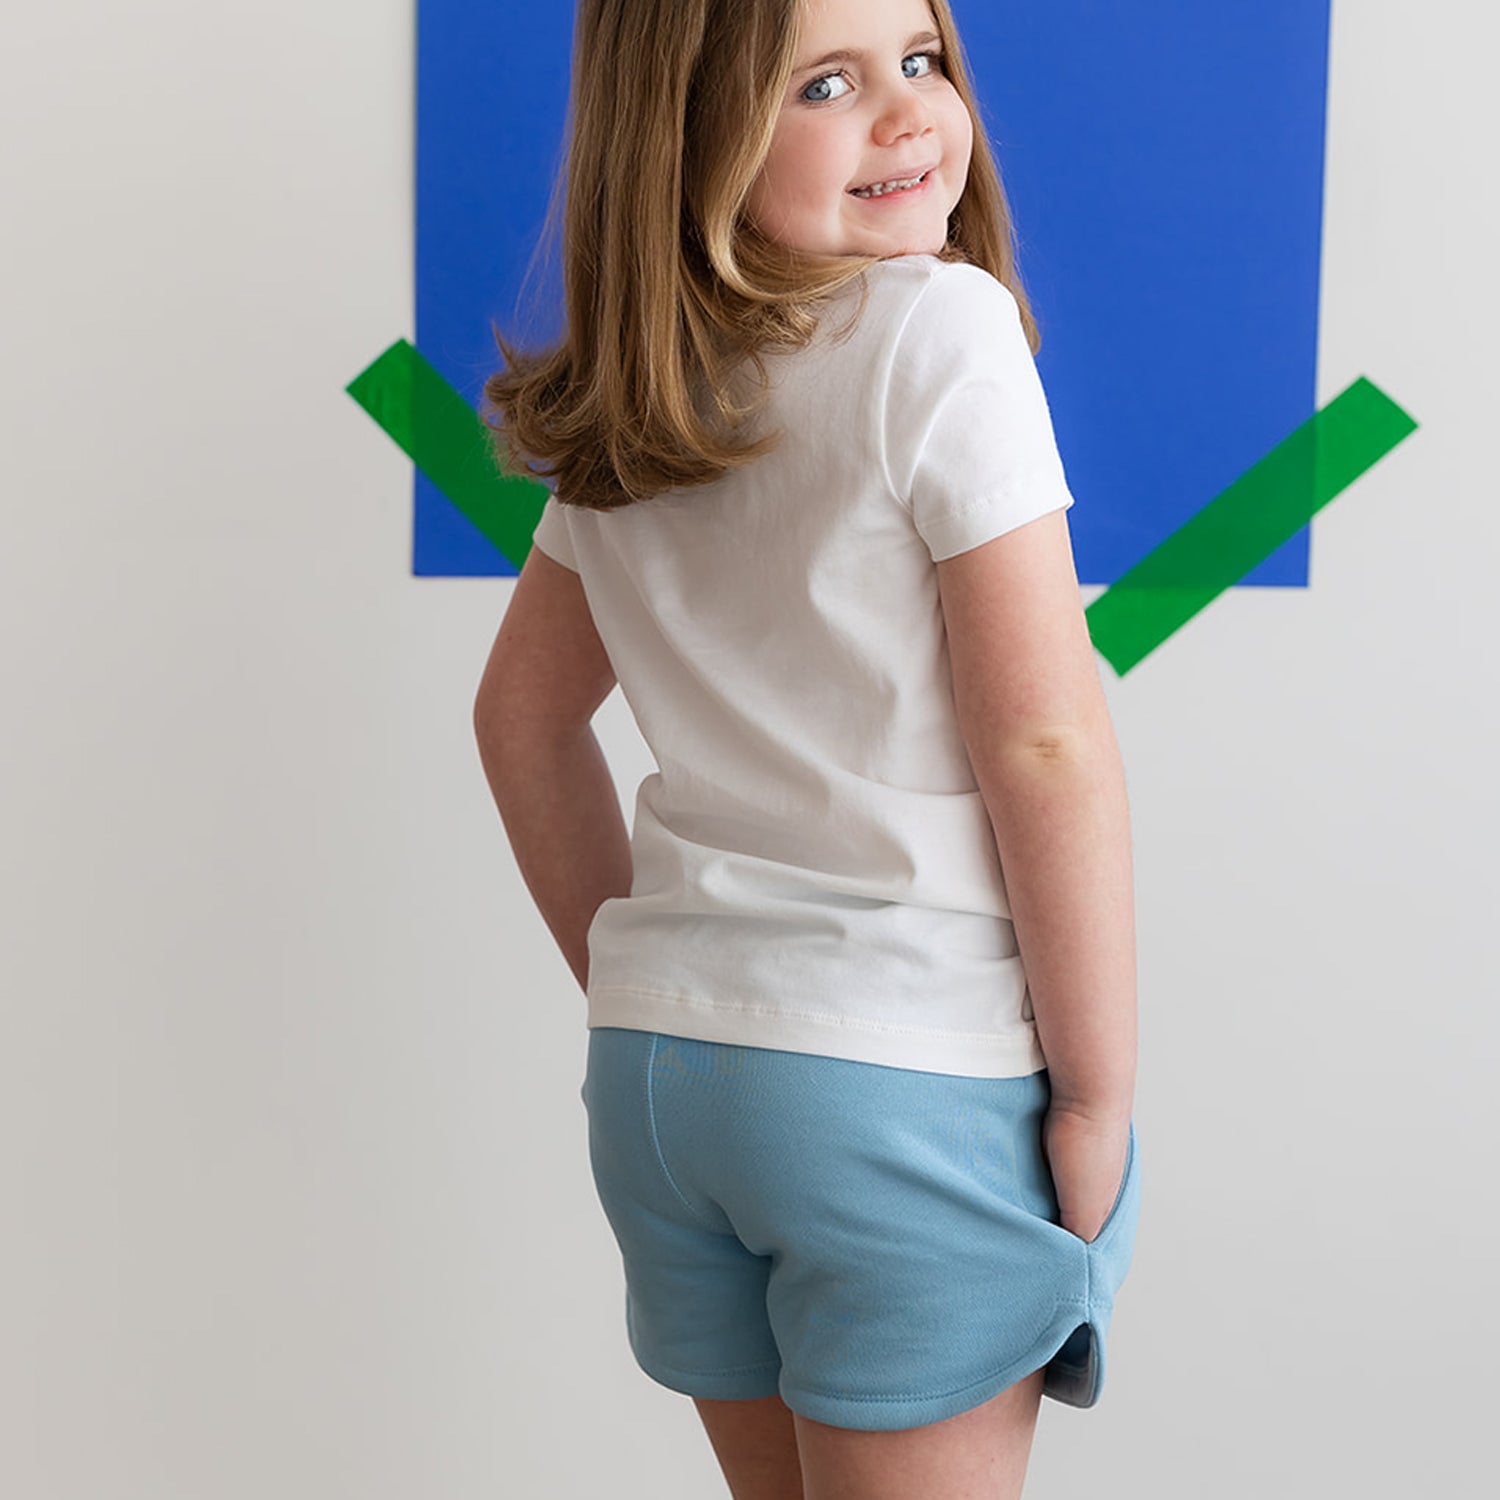 Kids Shorts: Organic Cotton Drawstring Track Shorts